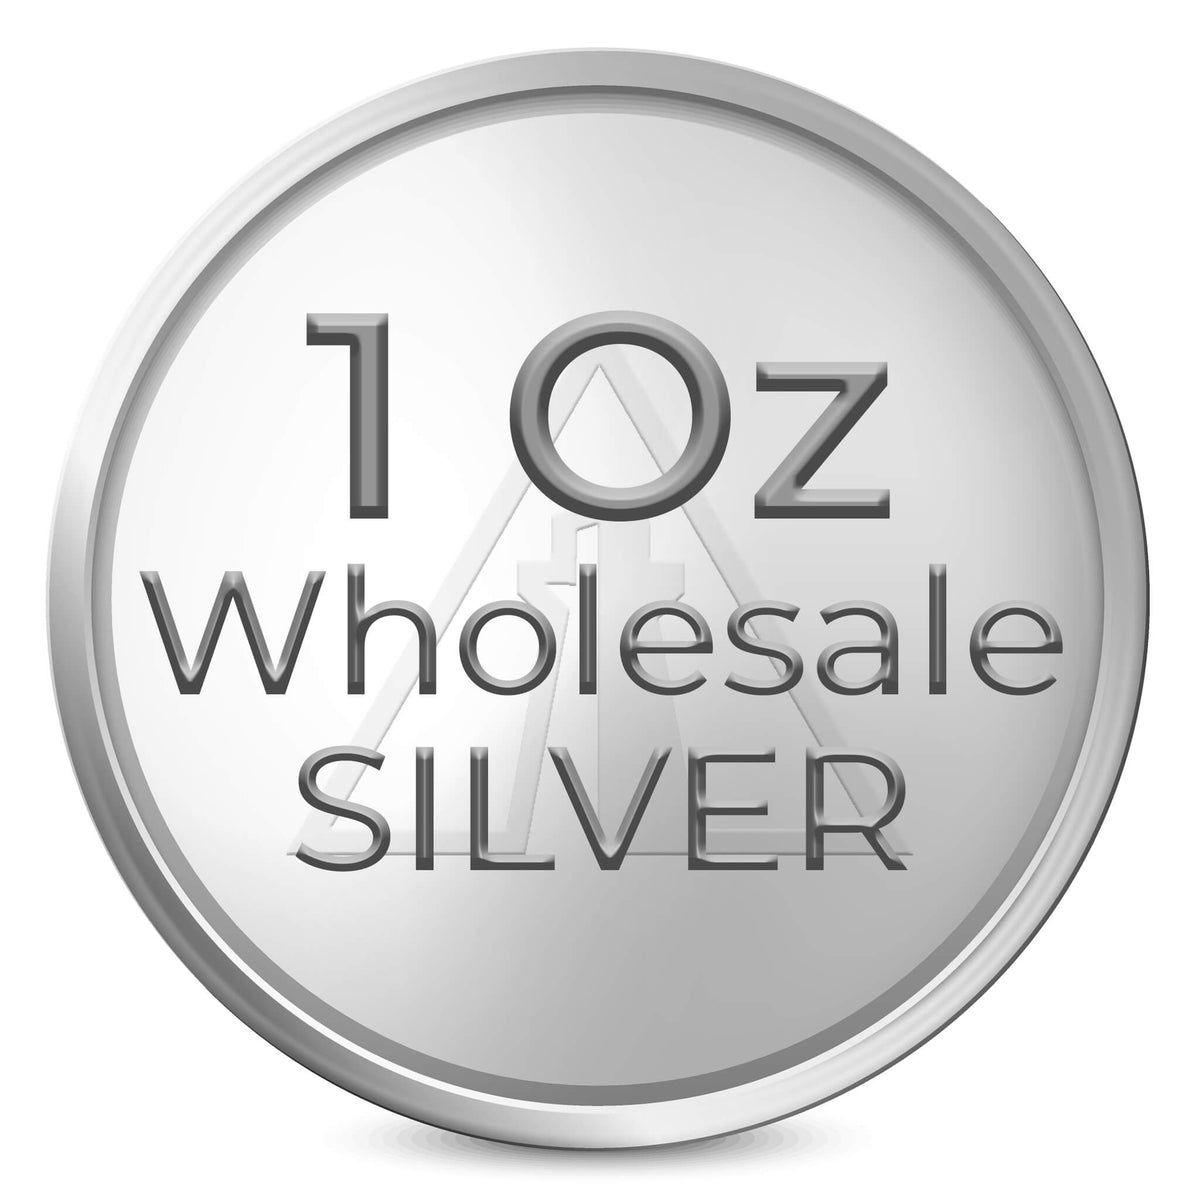 Wholesale Vaulted Silver Bullion